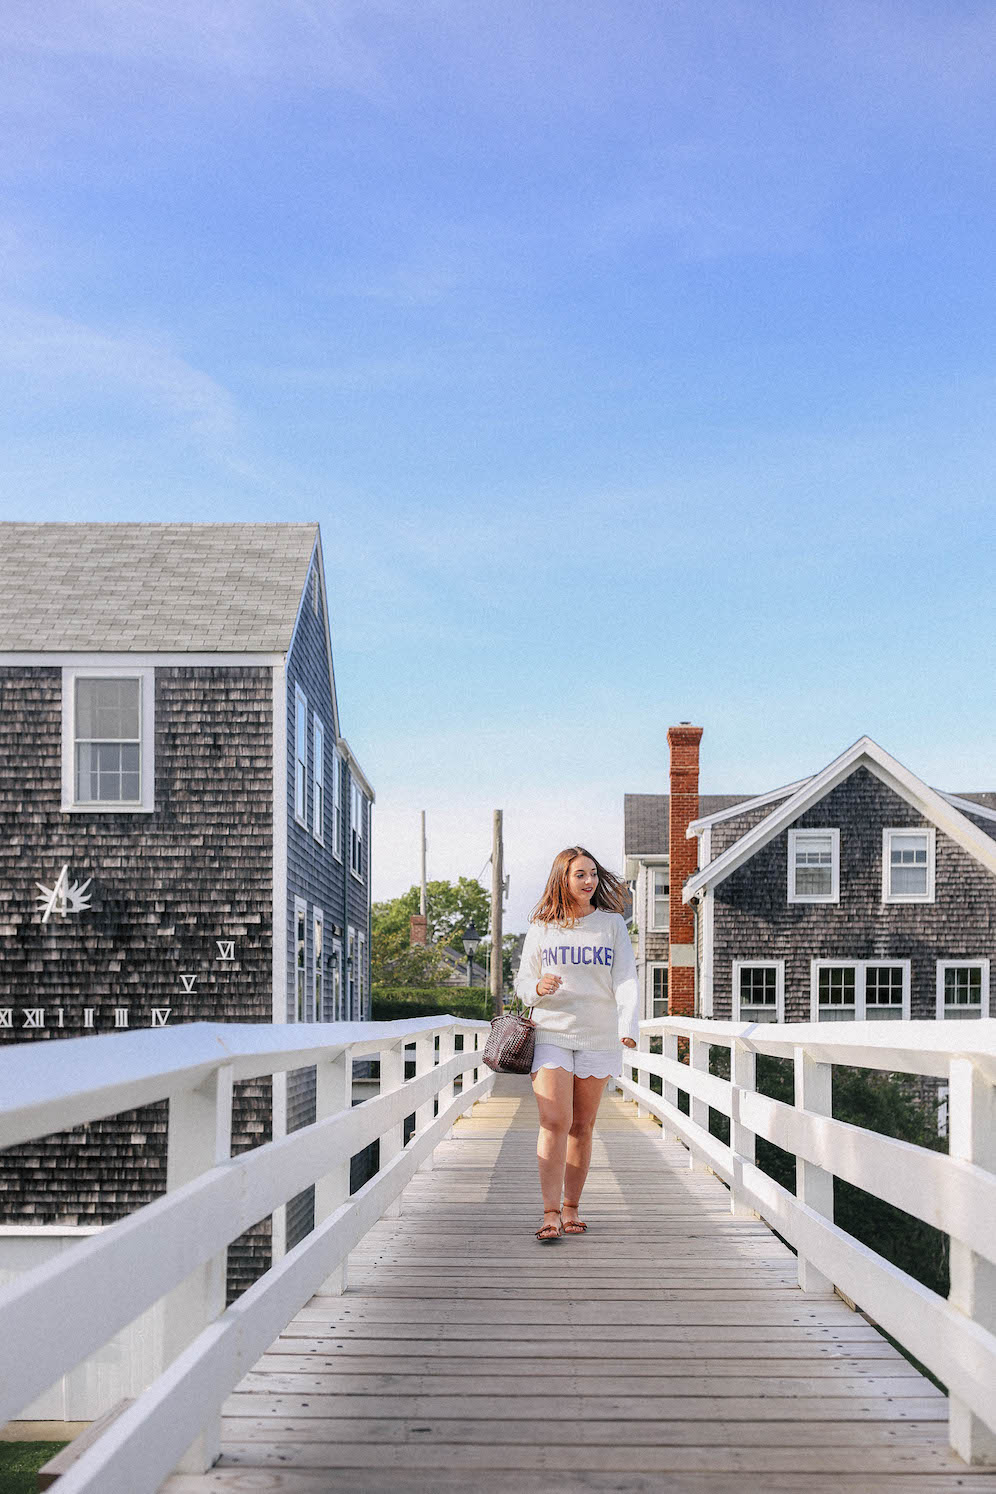 New England During Summertime The Coastal Confidence Aubrey Yandow